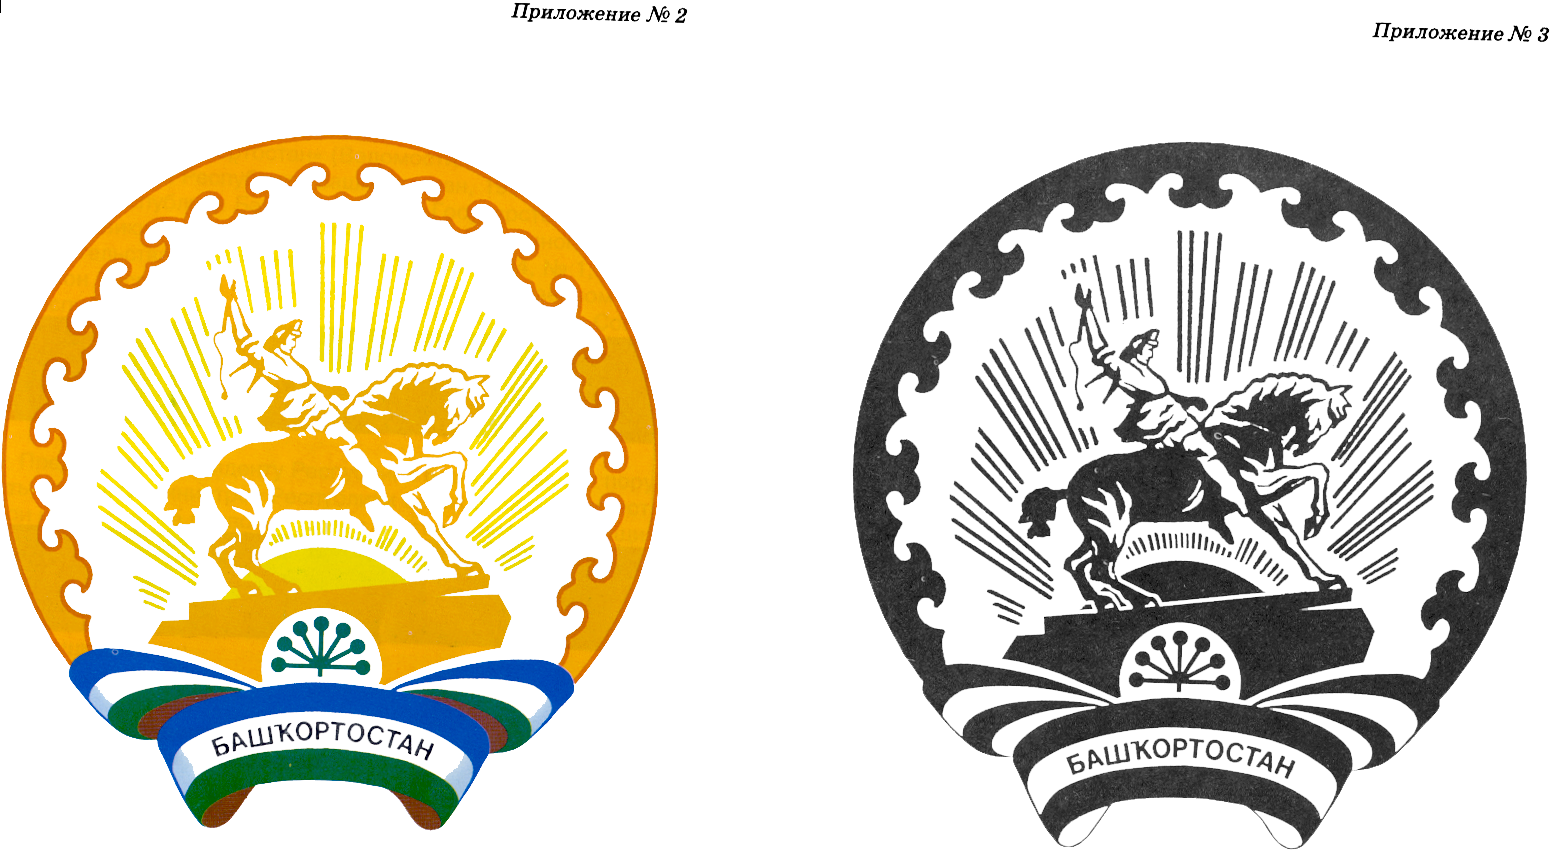 Республика Башкирия герб